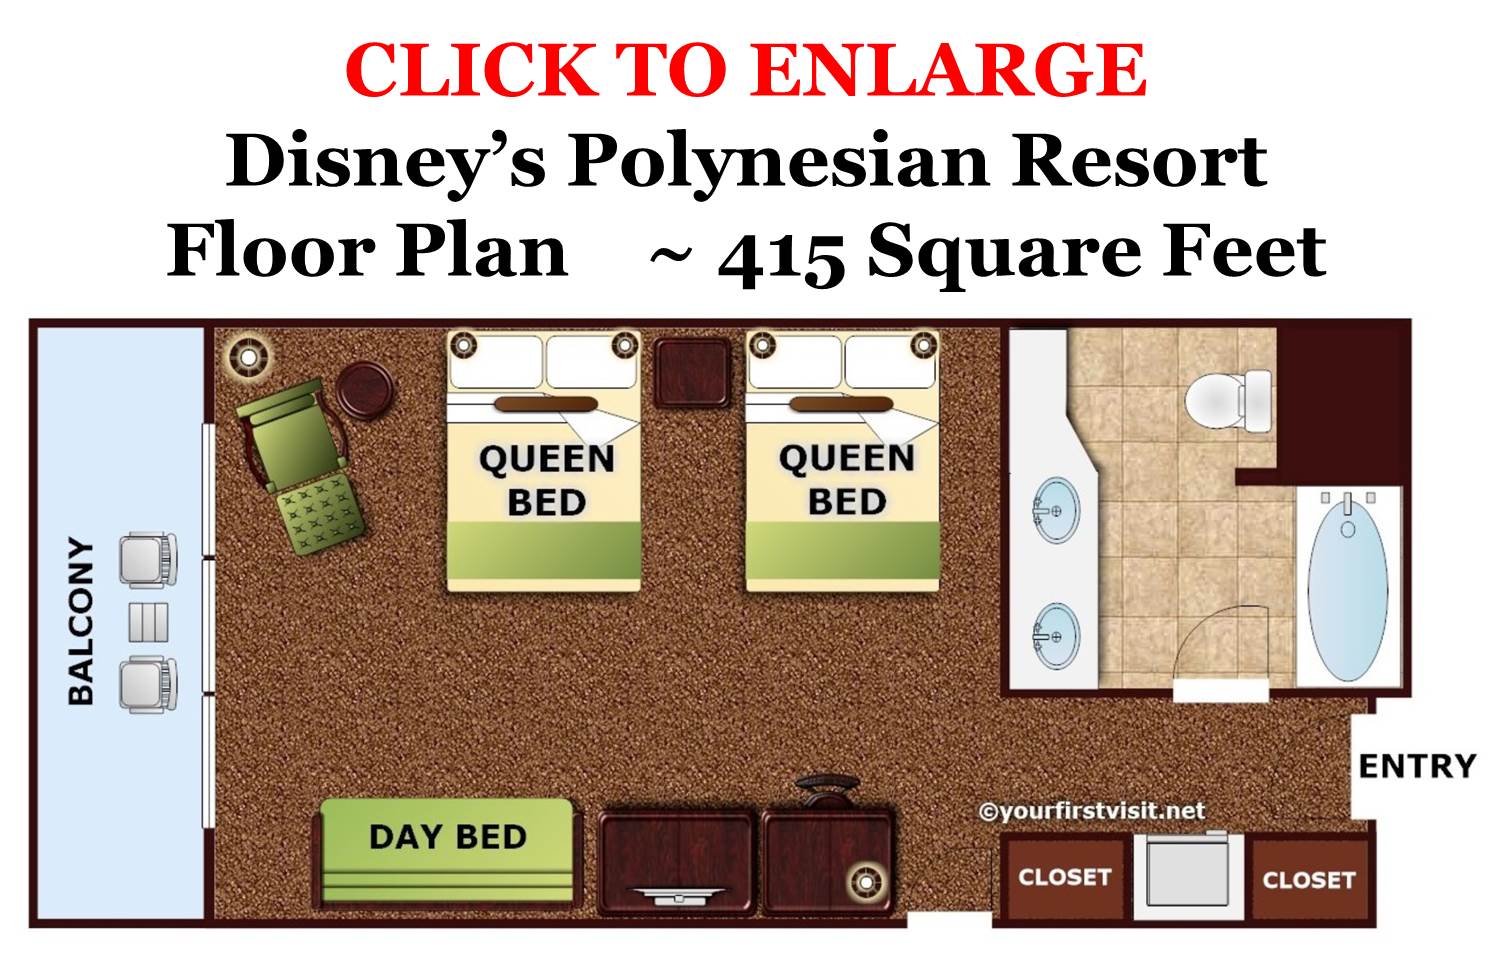 Floor-Plan-Disneys-Polynesian-Resort-from-yourfirstvisit.net_.jpg